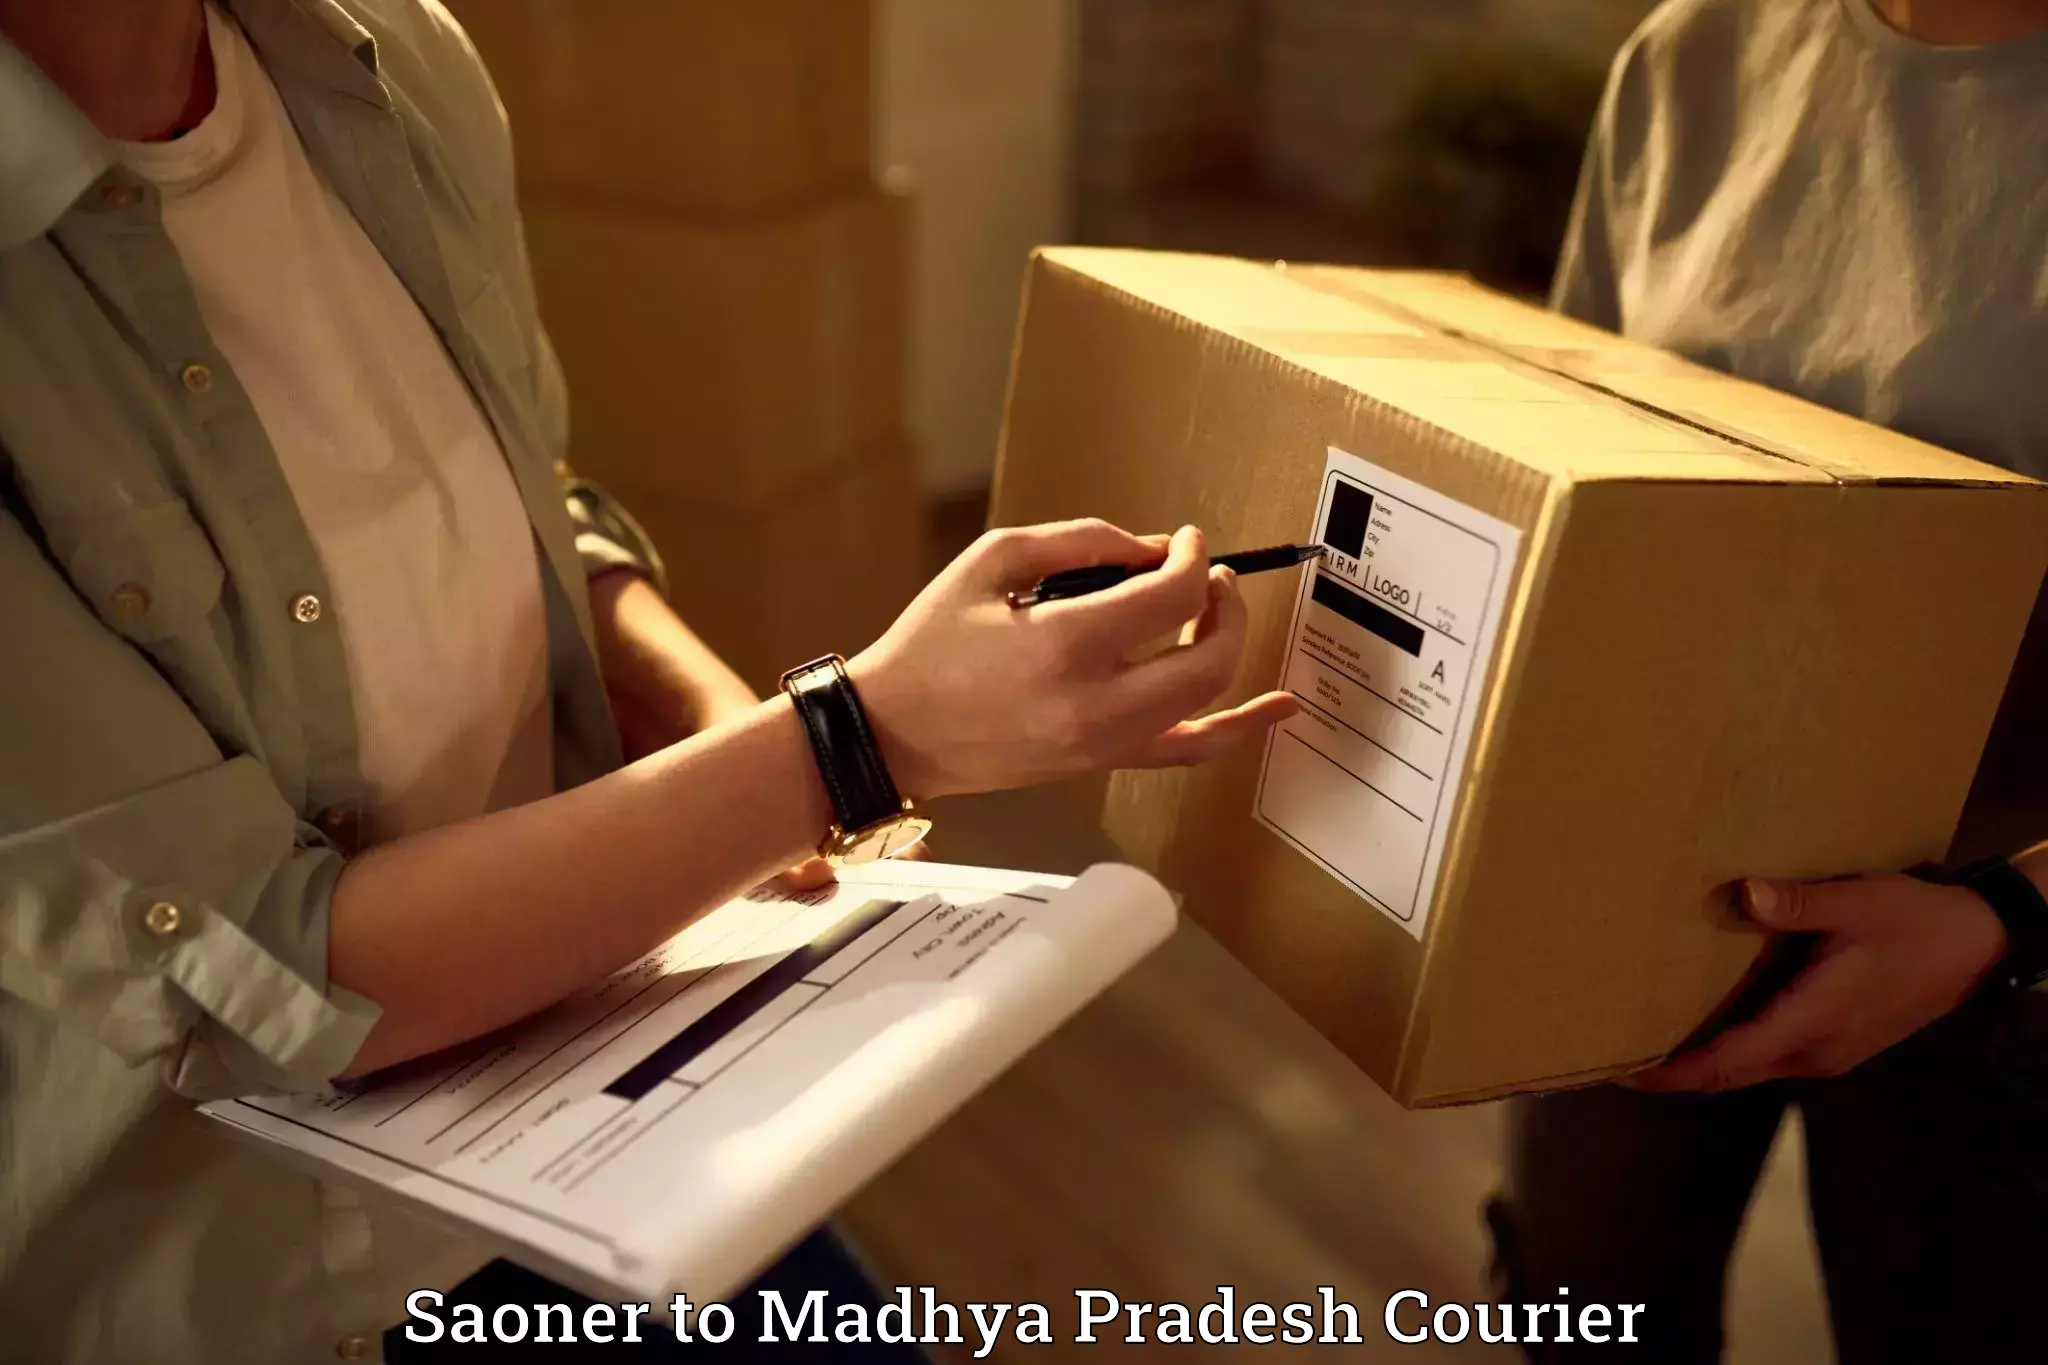 Professional moving company Saoner to Madhya Pradesh